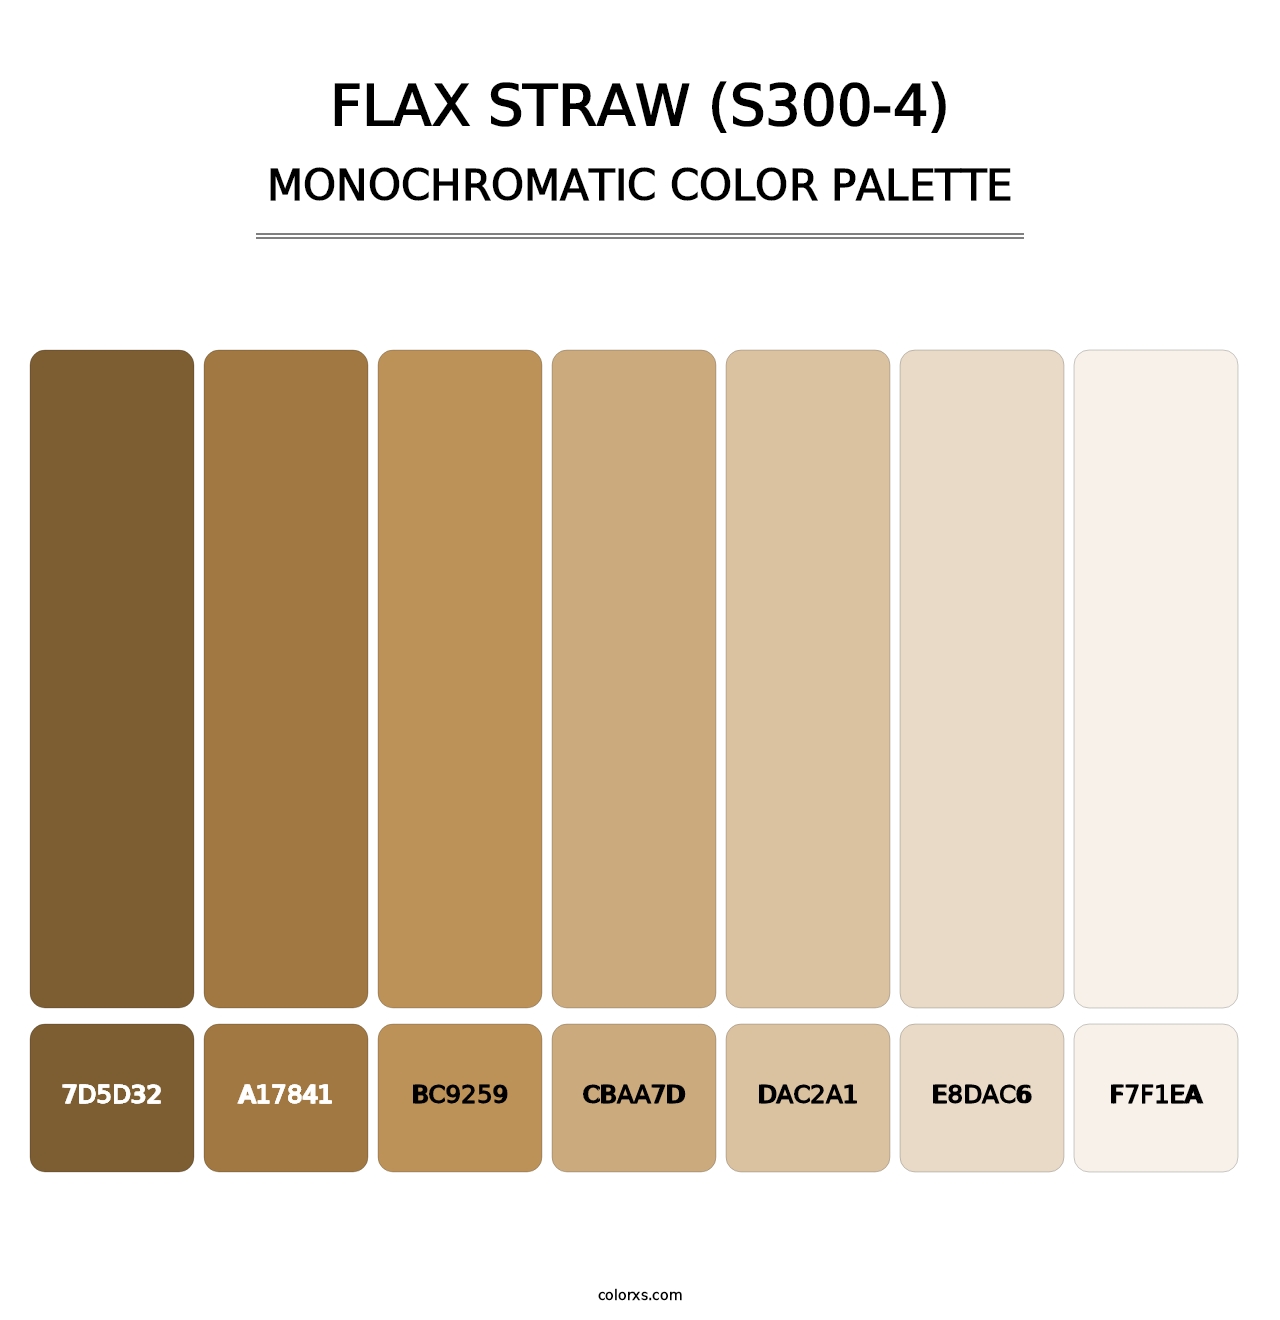 Flax Straw (S300-4) - Monochromatic Color Palette